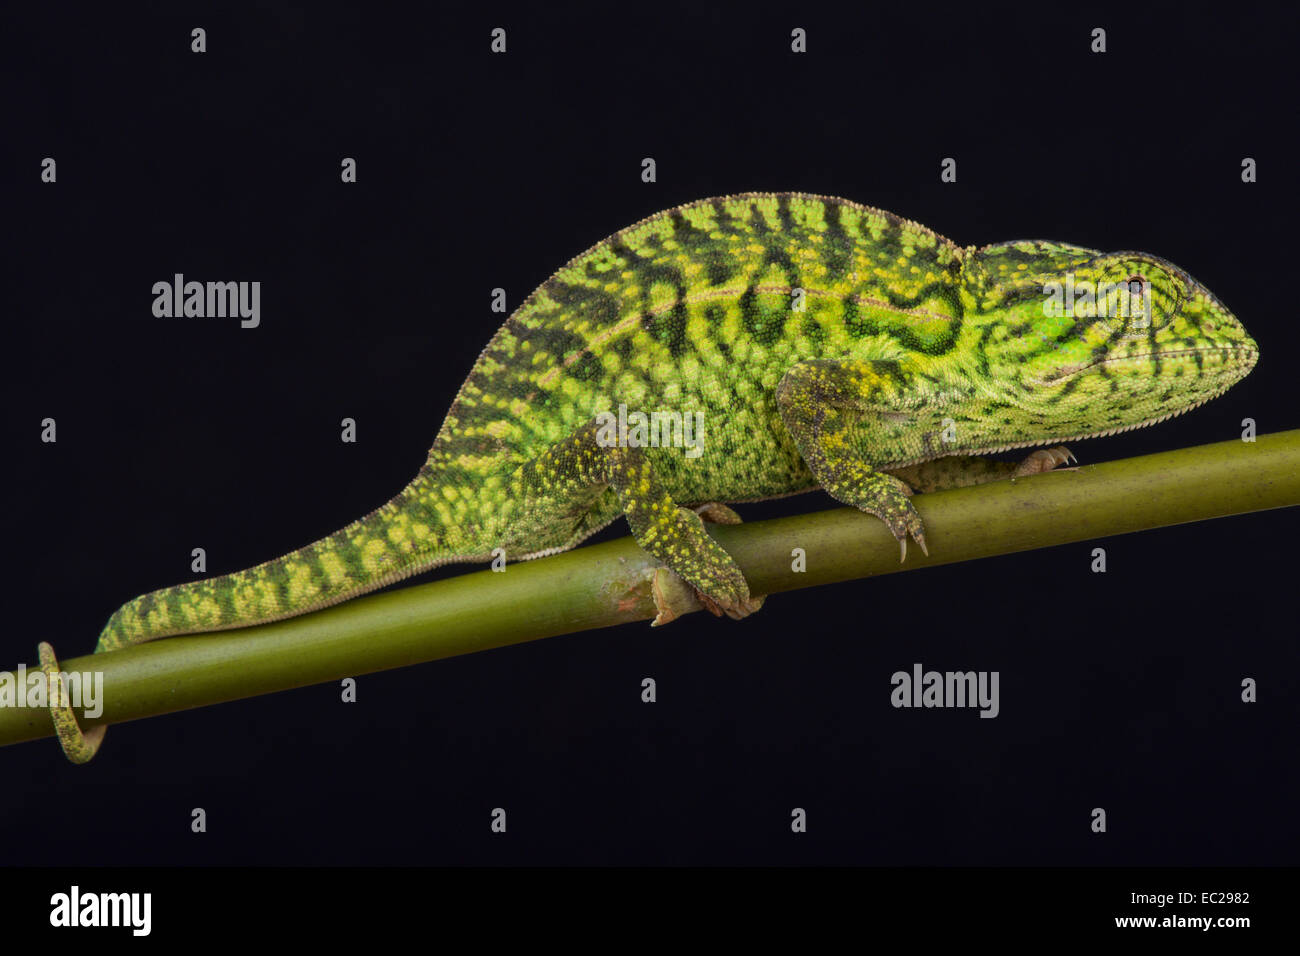 Jeweled chameleon / Furcifer lateralis Stock Photo